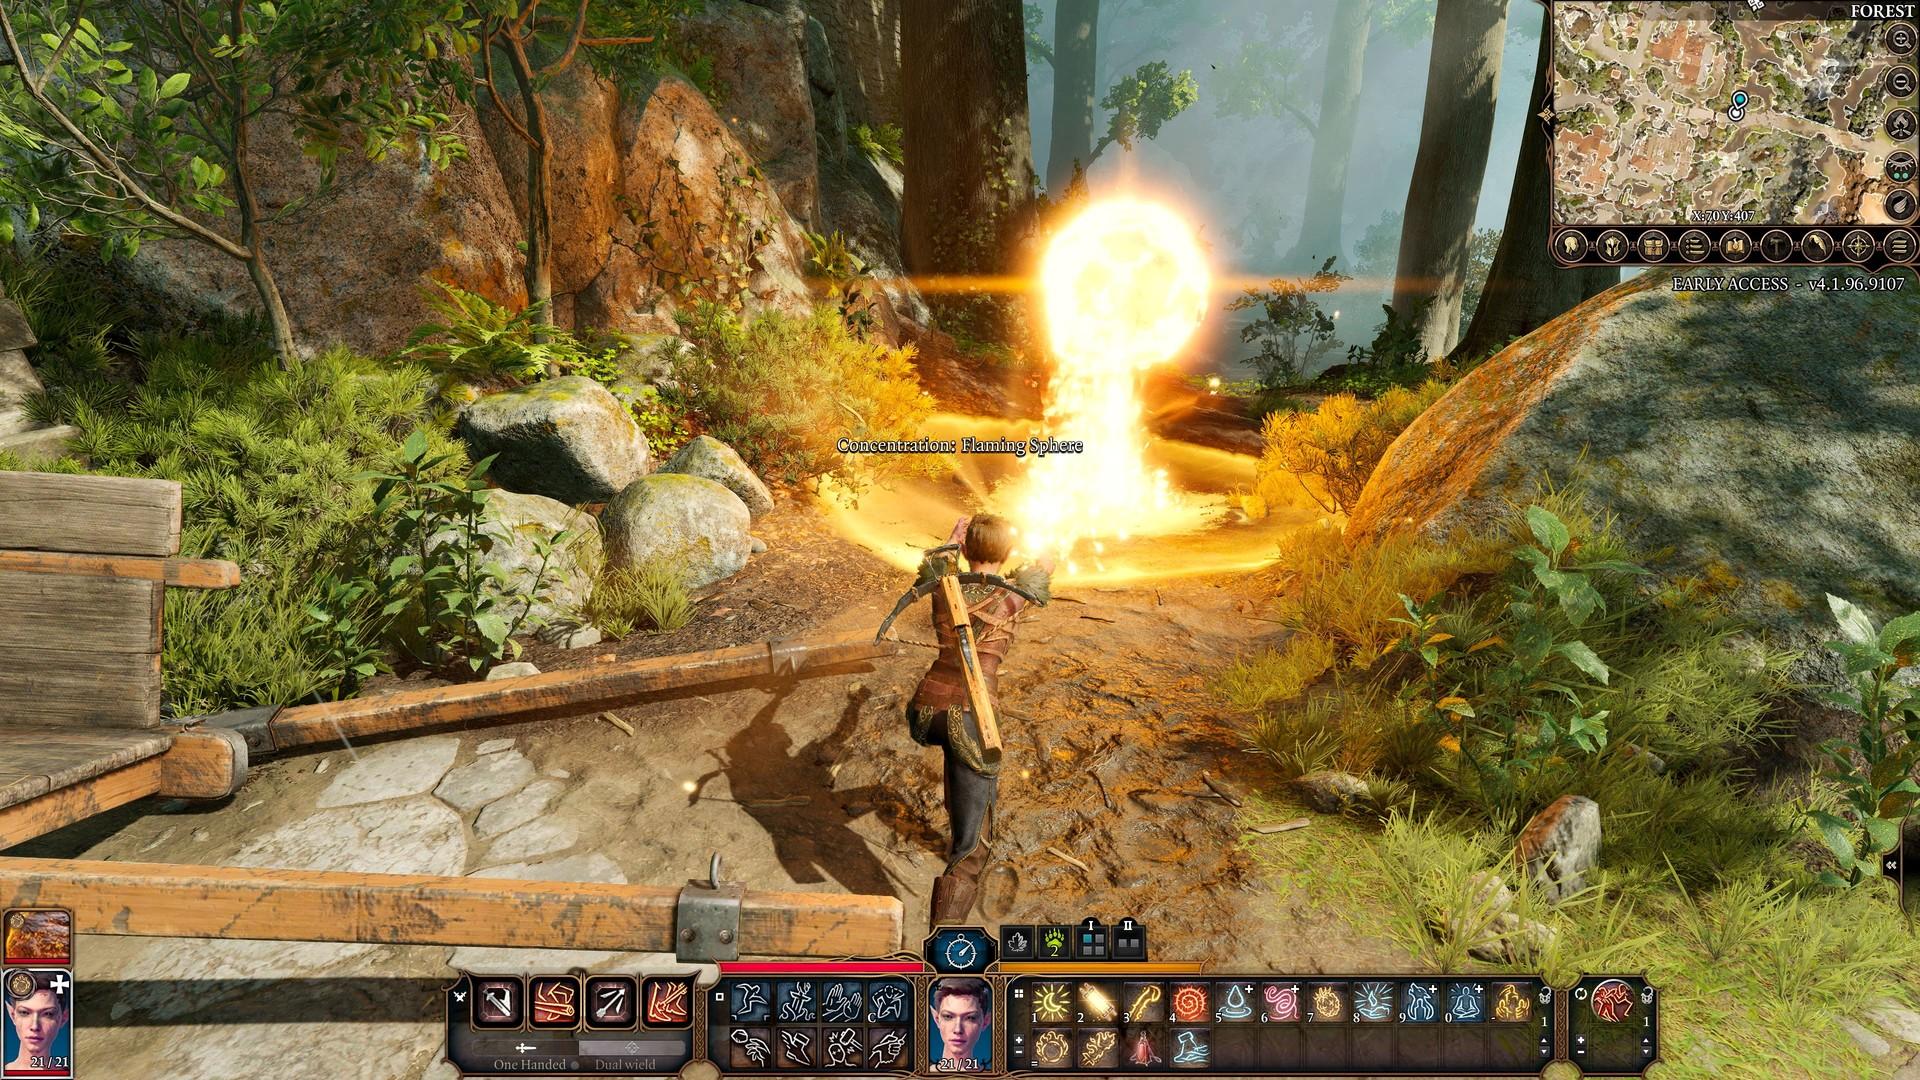 Screenshot №21 from game Baldur's Gate 3